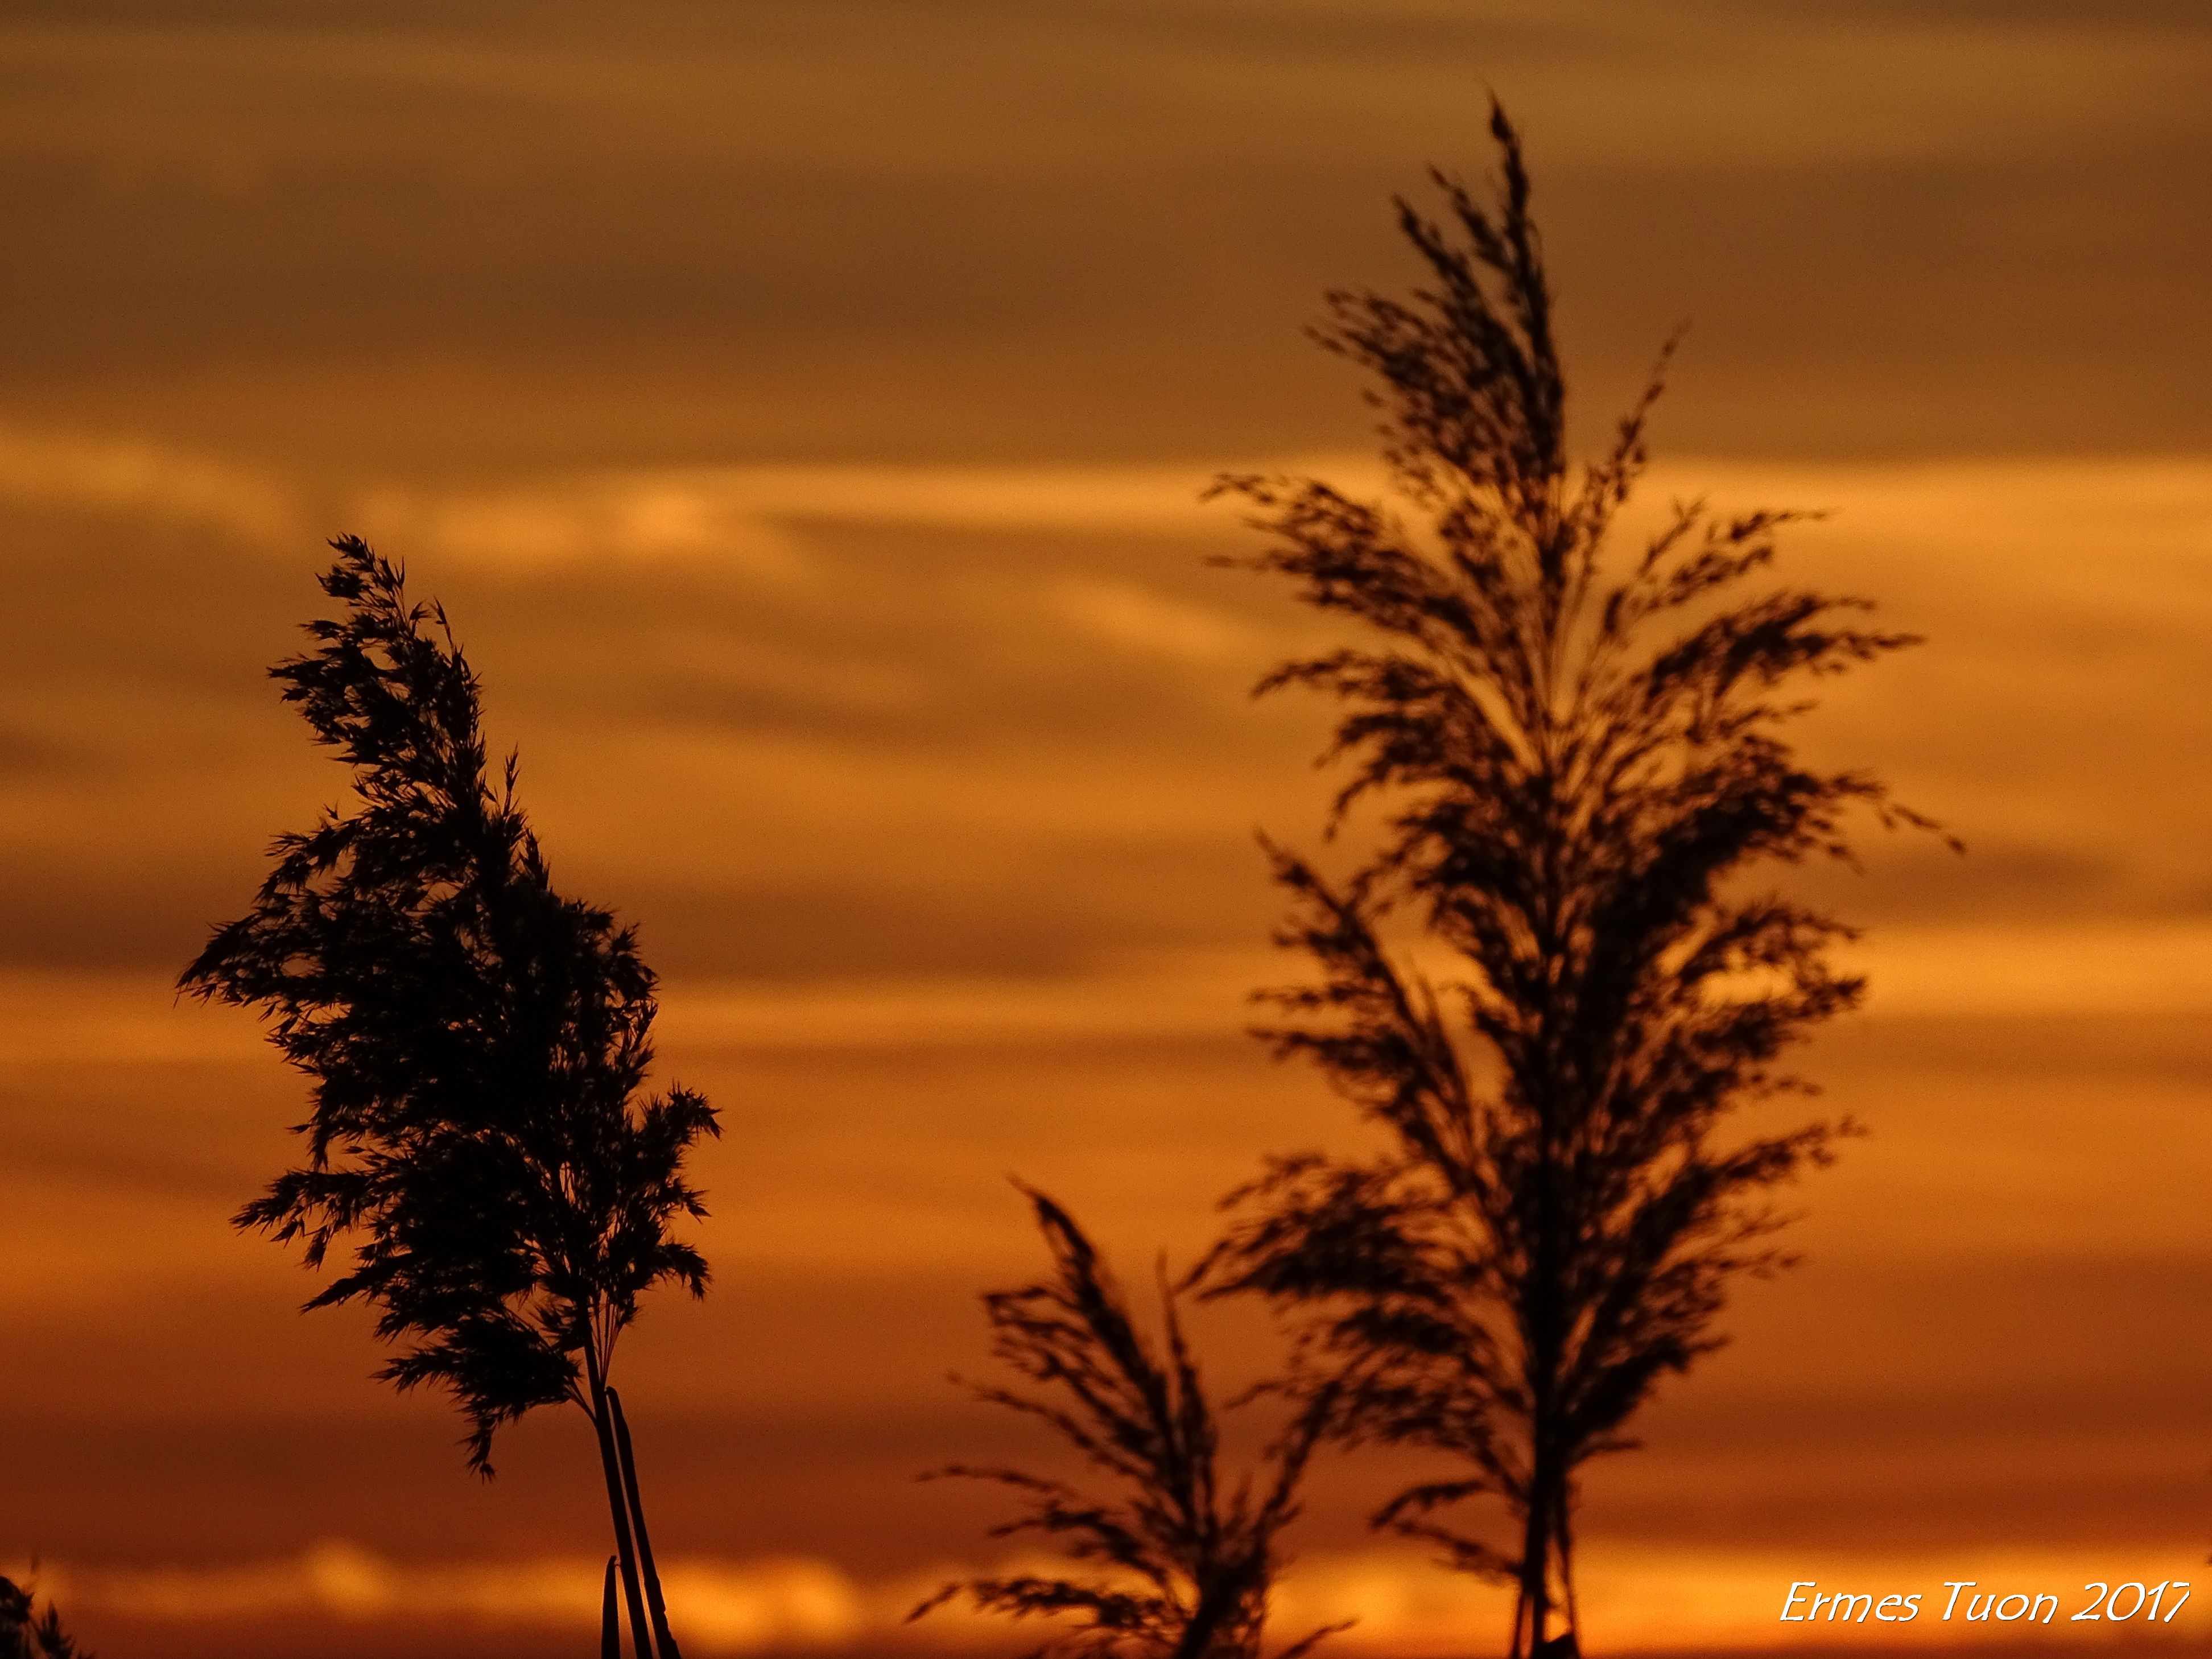 Caption: Sunset - Local Guide @ermest